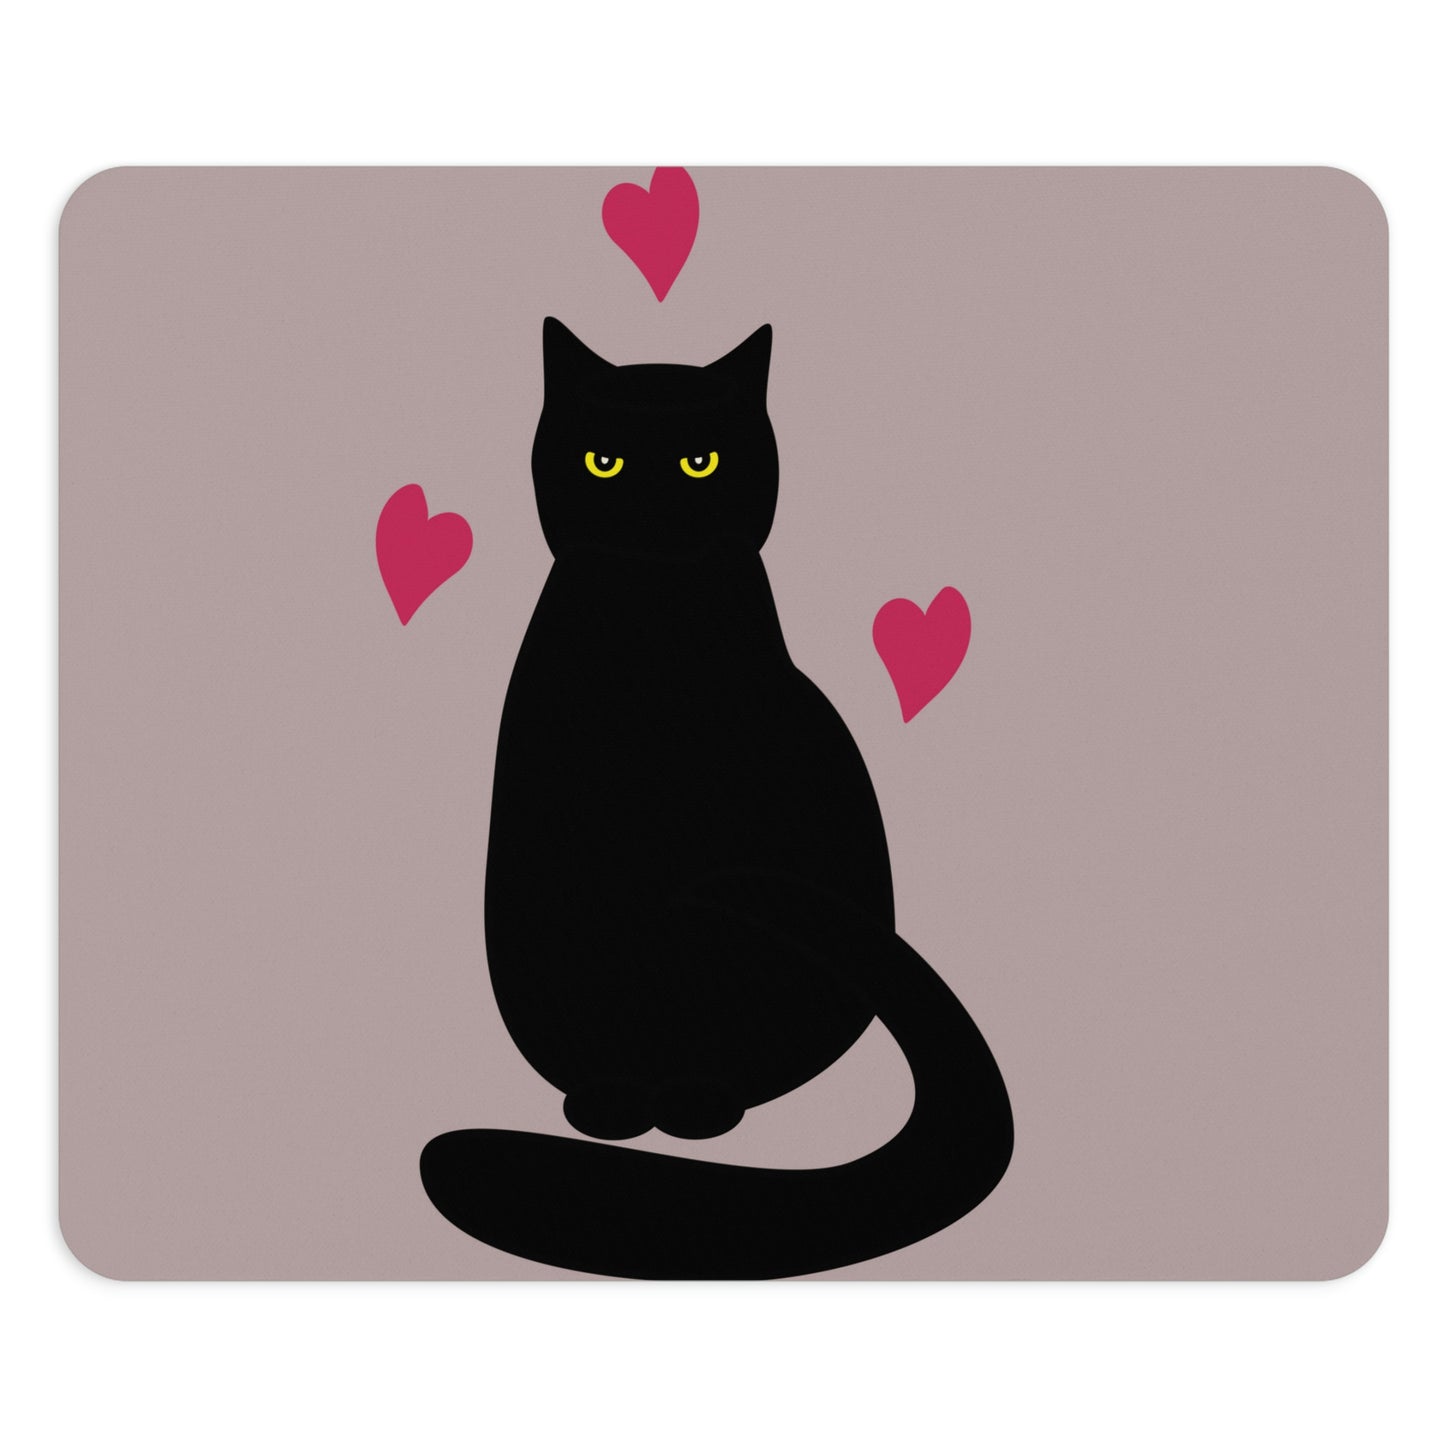 Black Cat with Heart Love Ergonomic Non-slip Creative Design Mouse Pad